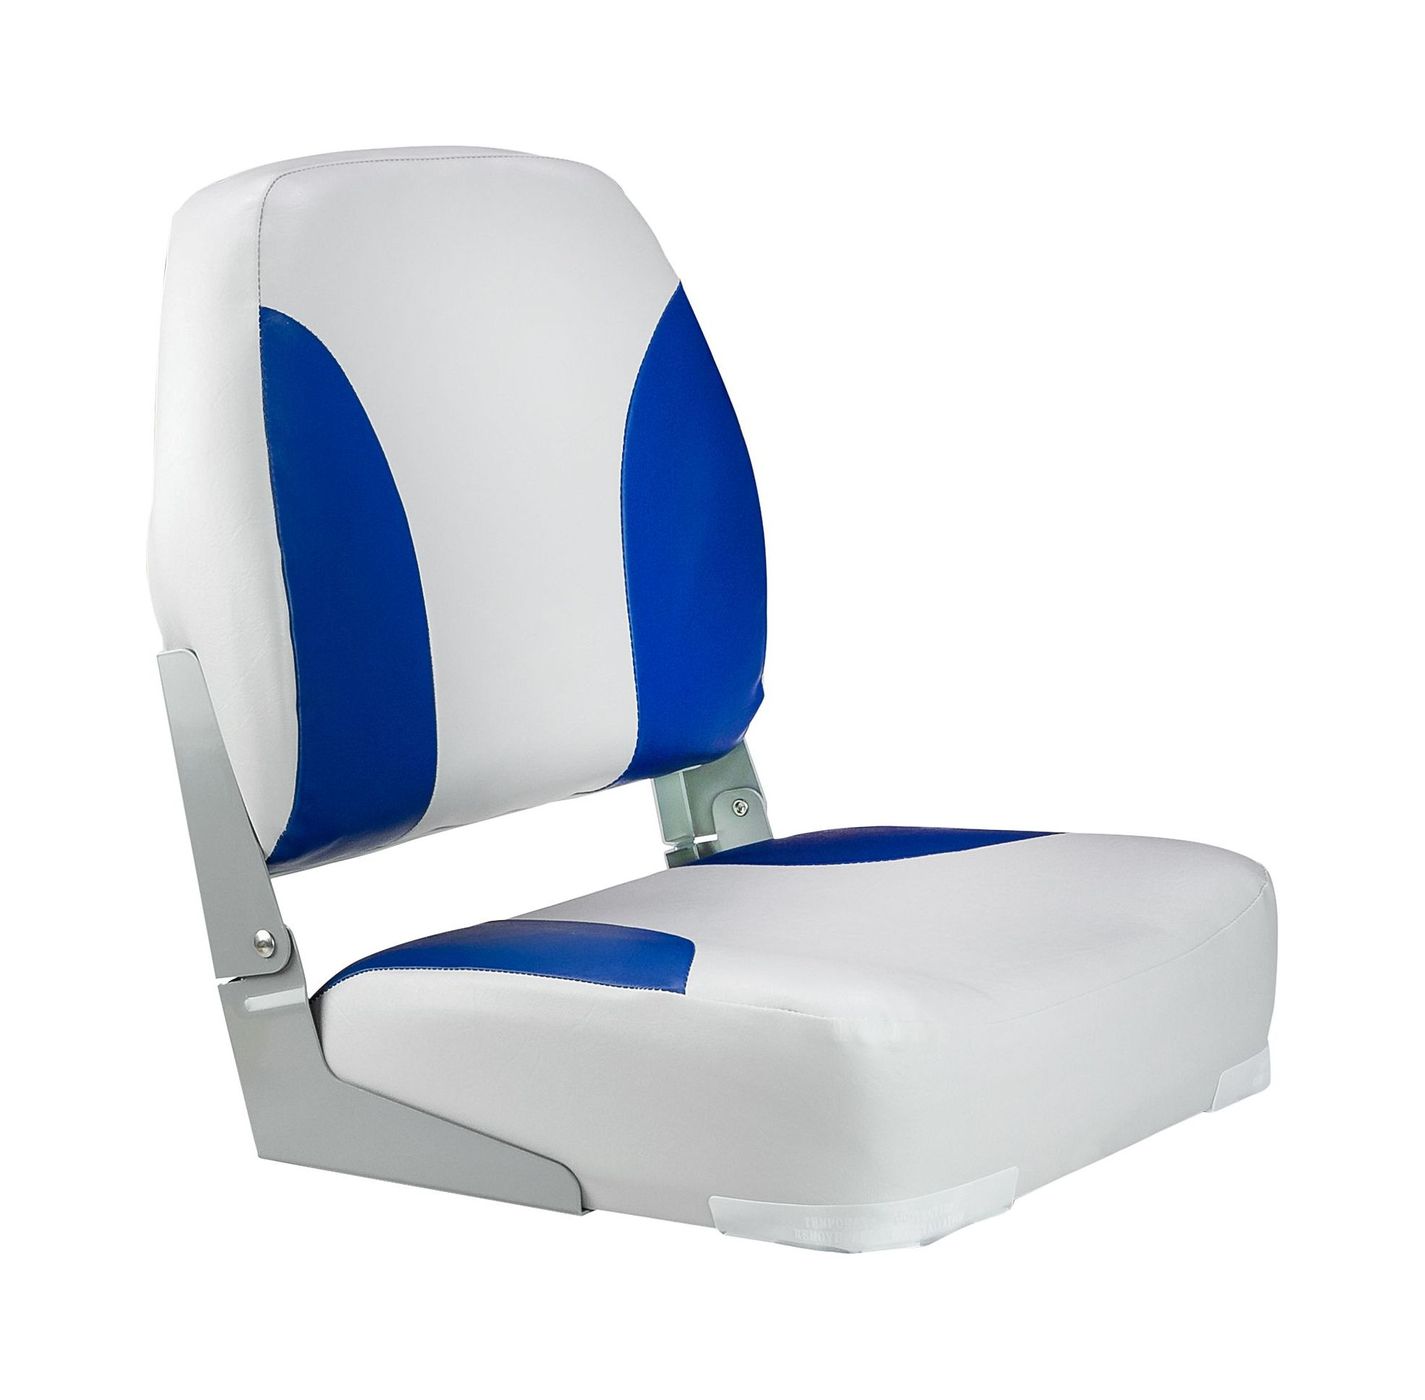 Кресло мягкое складное Classic, обивка винил, цвет серый/синий, Marine Rocket 75102GB-MR фен nobrand 13 1600 вт серый синий